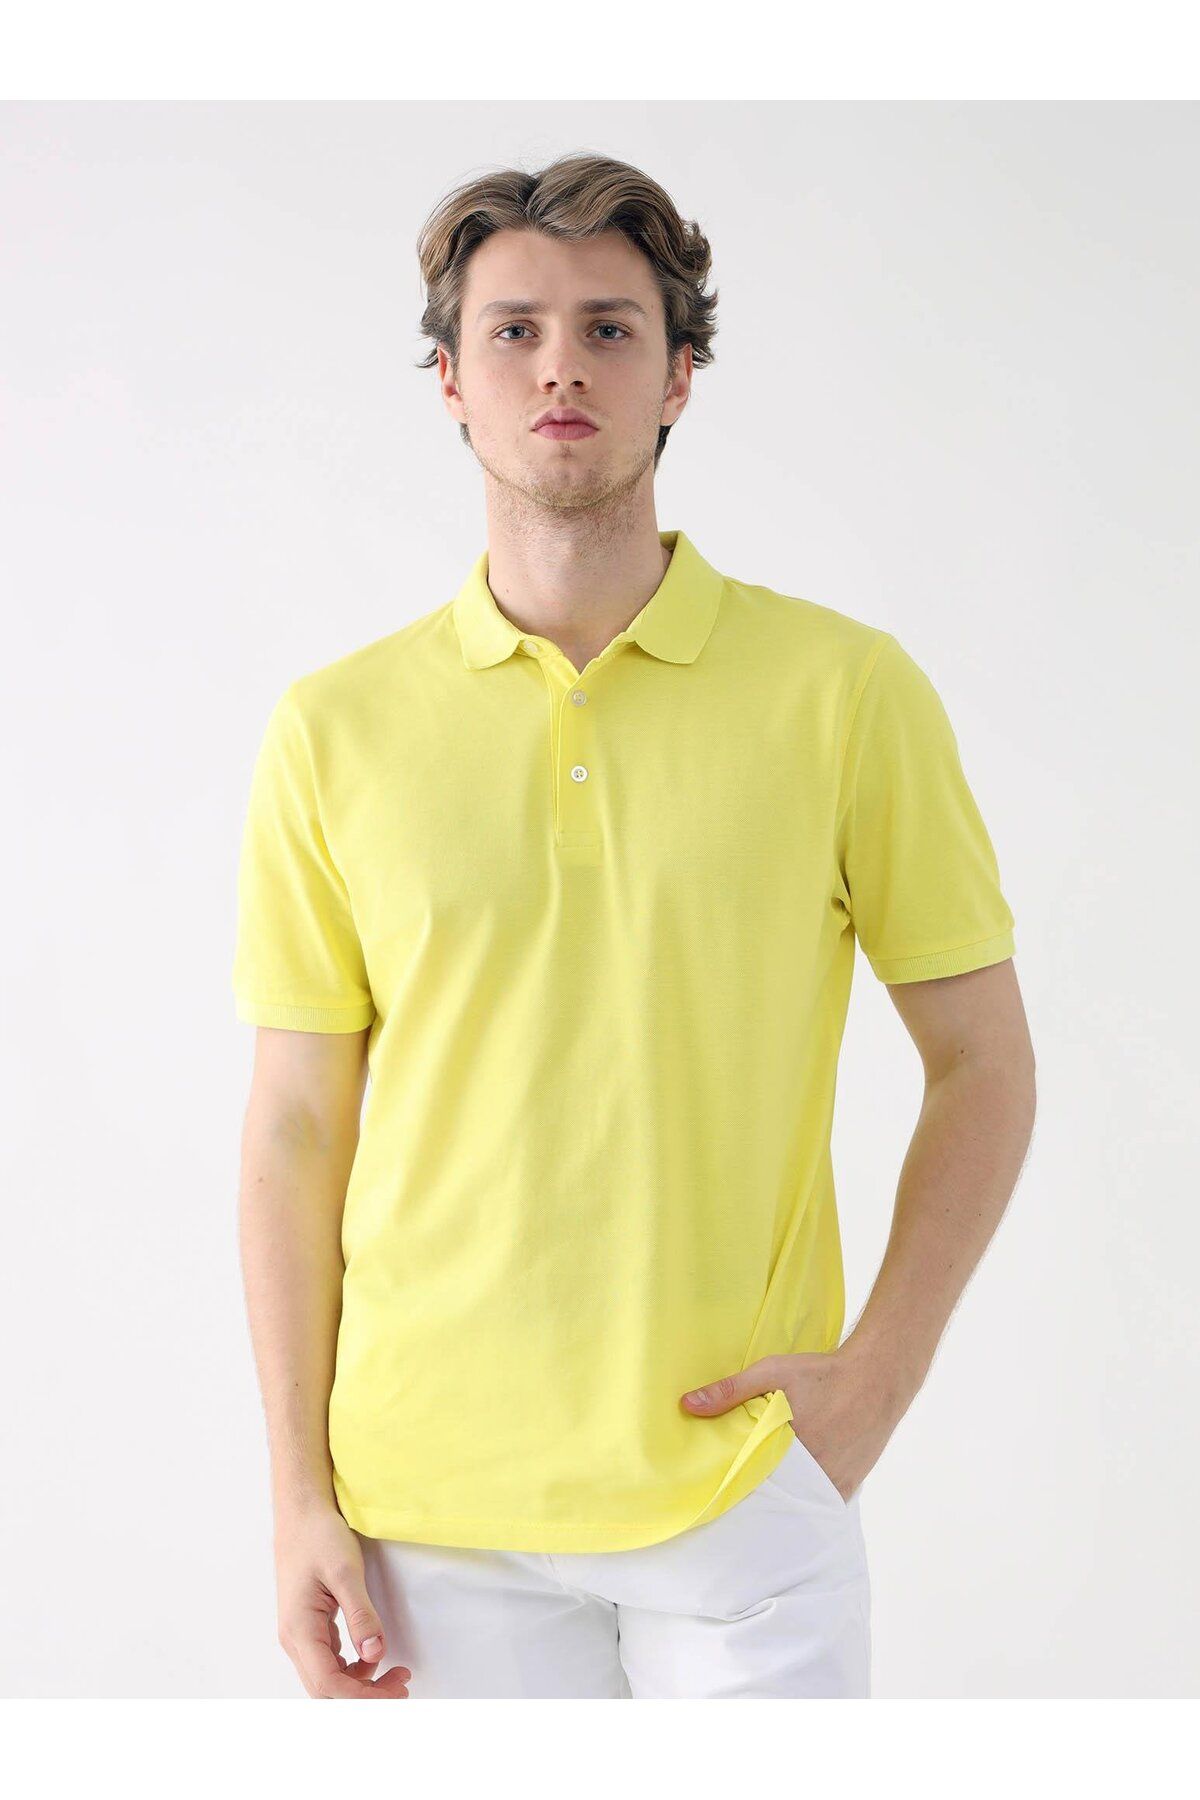 Dufy Sarı Erkek Slim Fit Düz Polo Yaka Tshirt - 85443